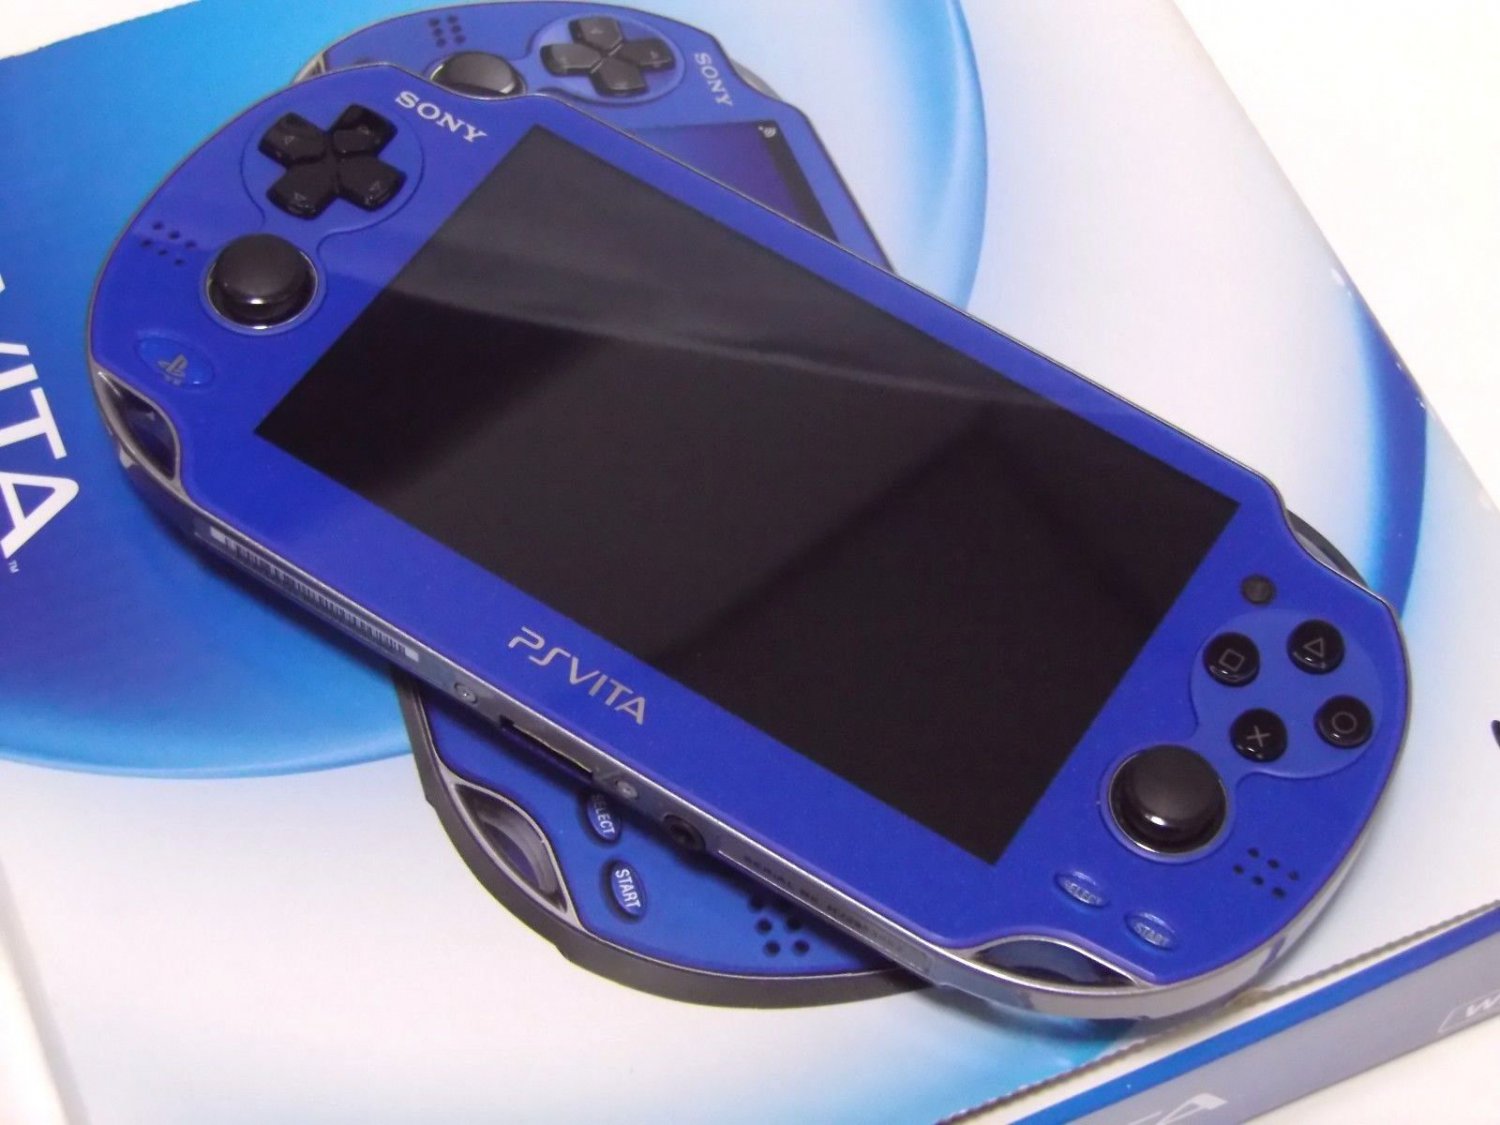 USED SONY PS Vita Console System PCH-1000 ZA04 BLUE Wi-fi Model